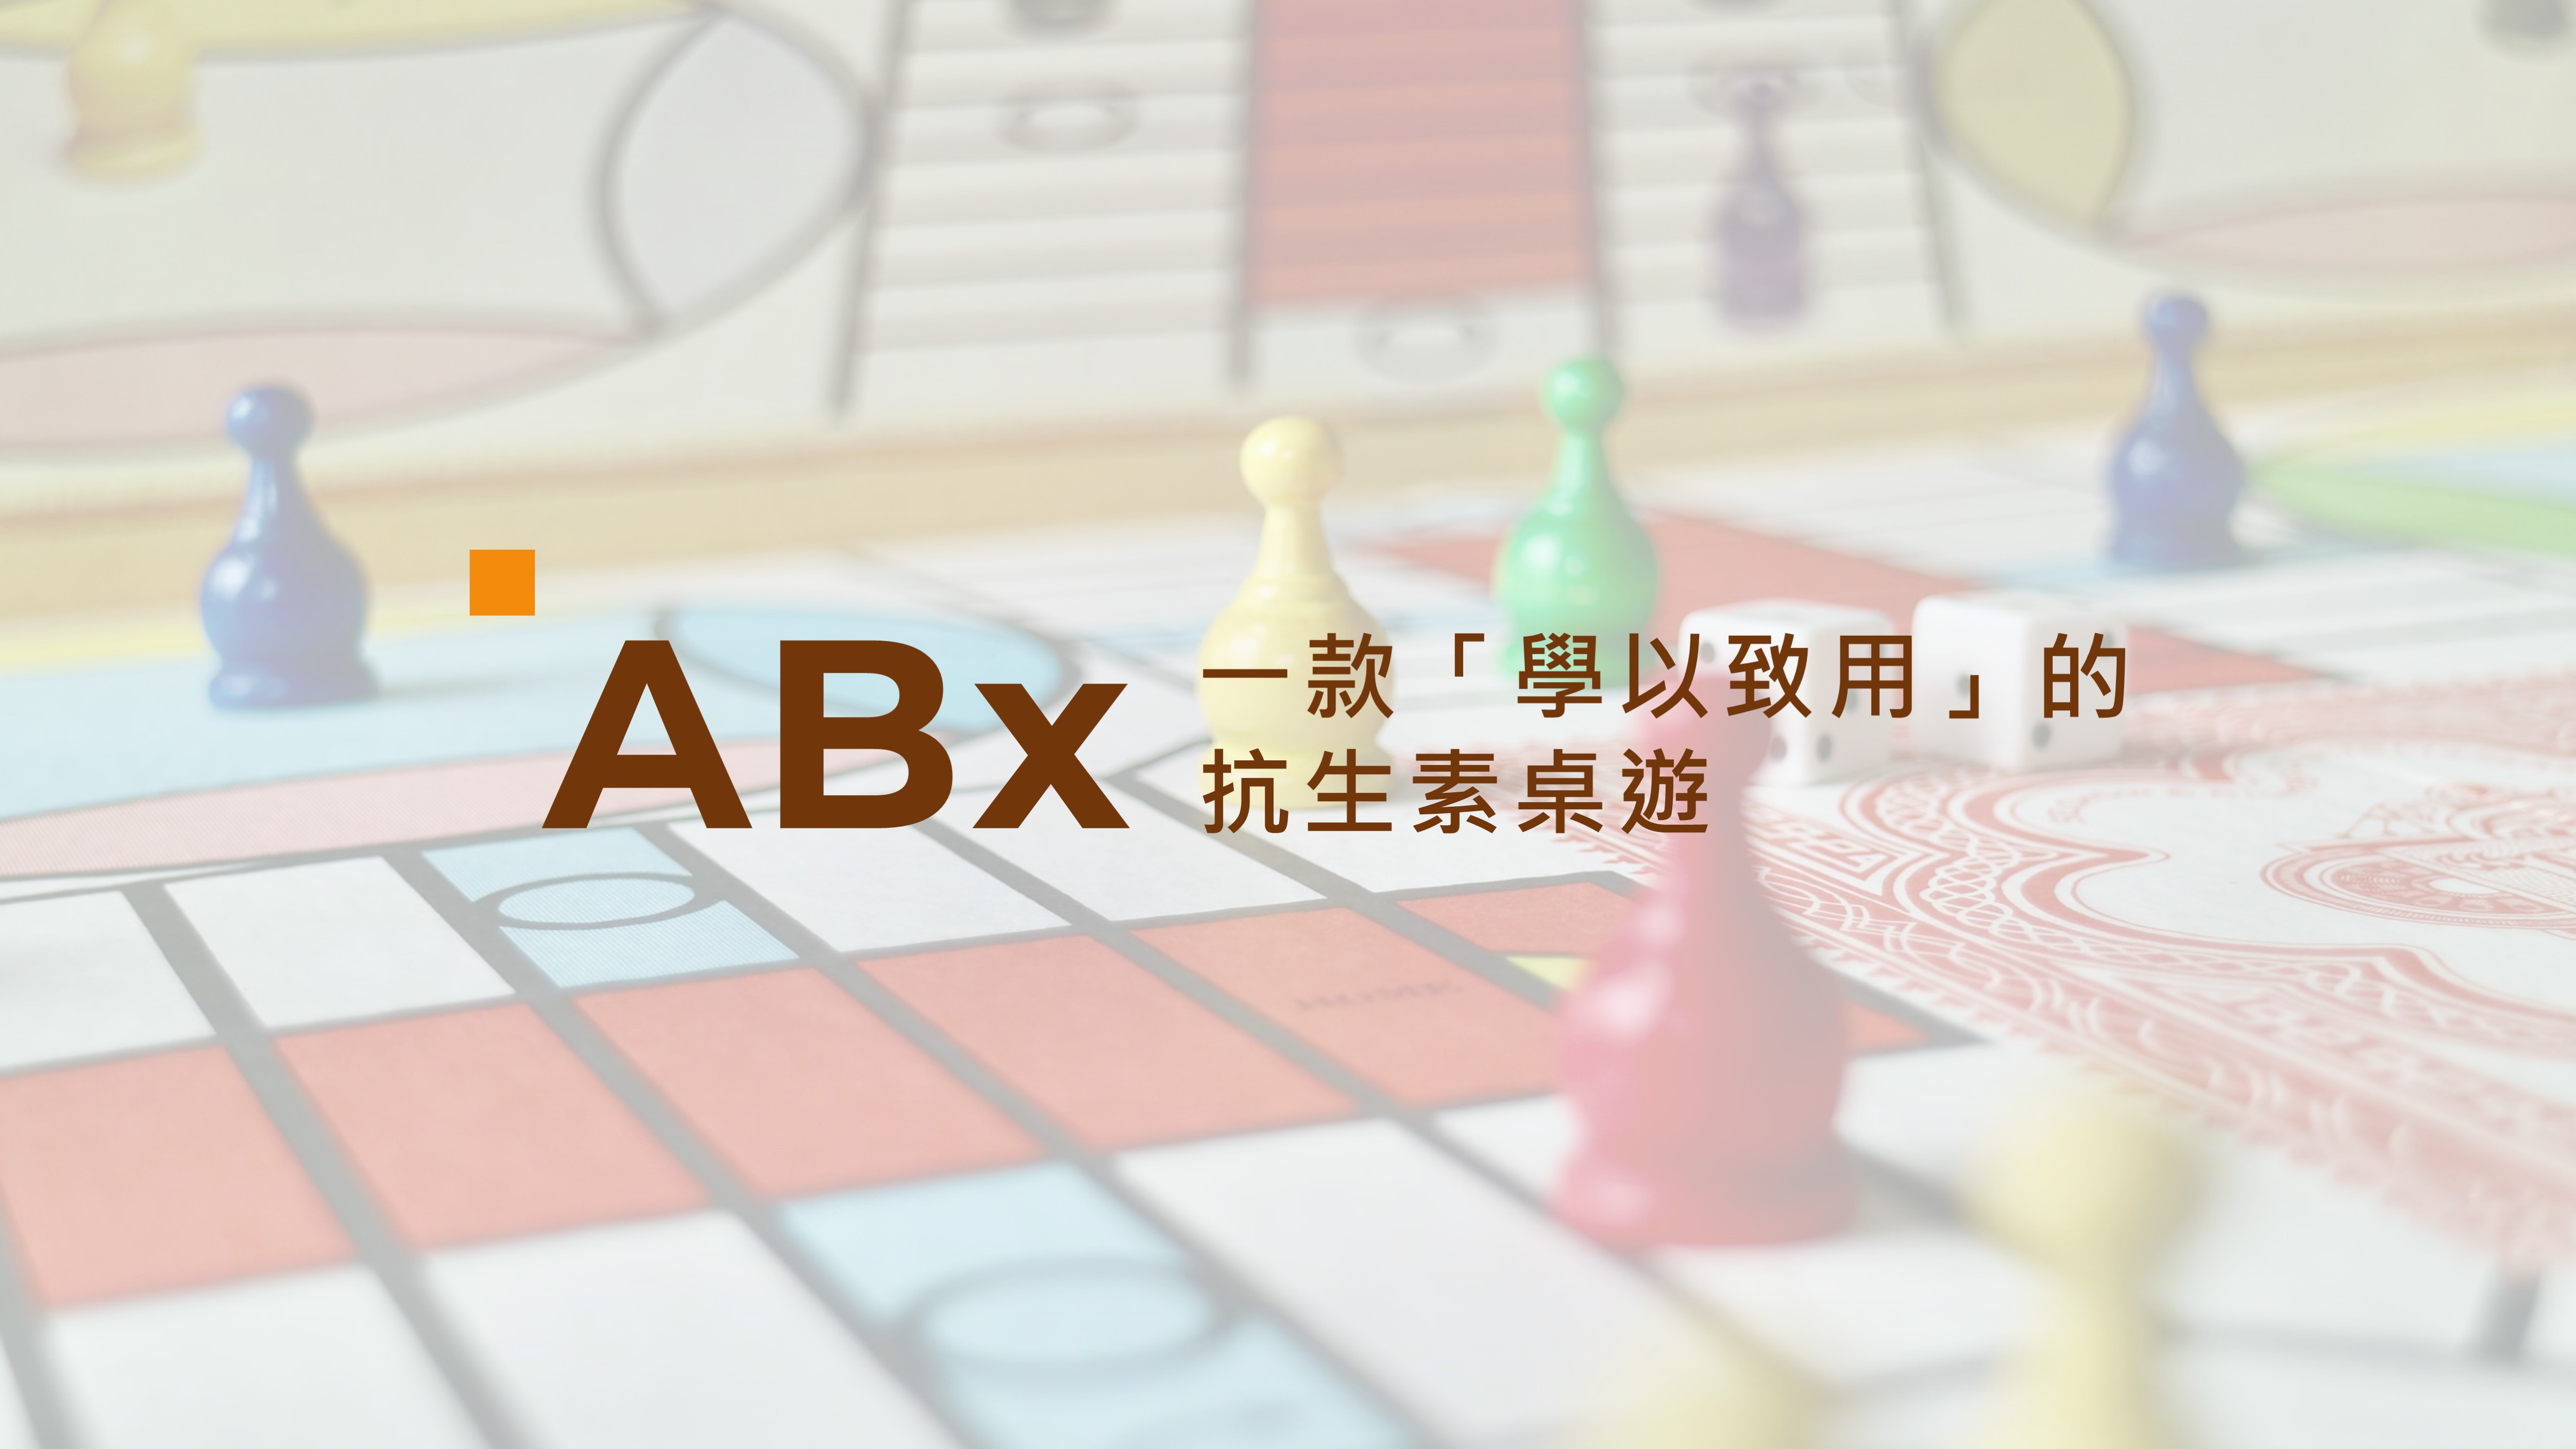 ABx - 一款「學以致用」的抗生素桌遊